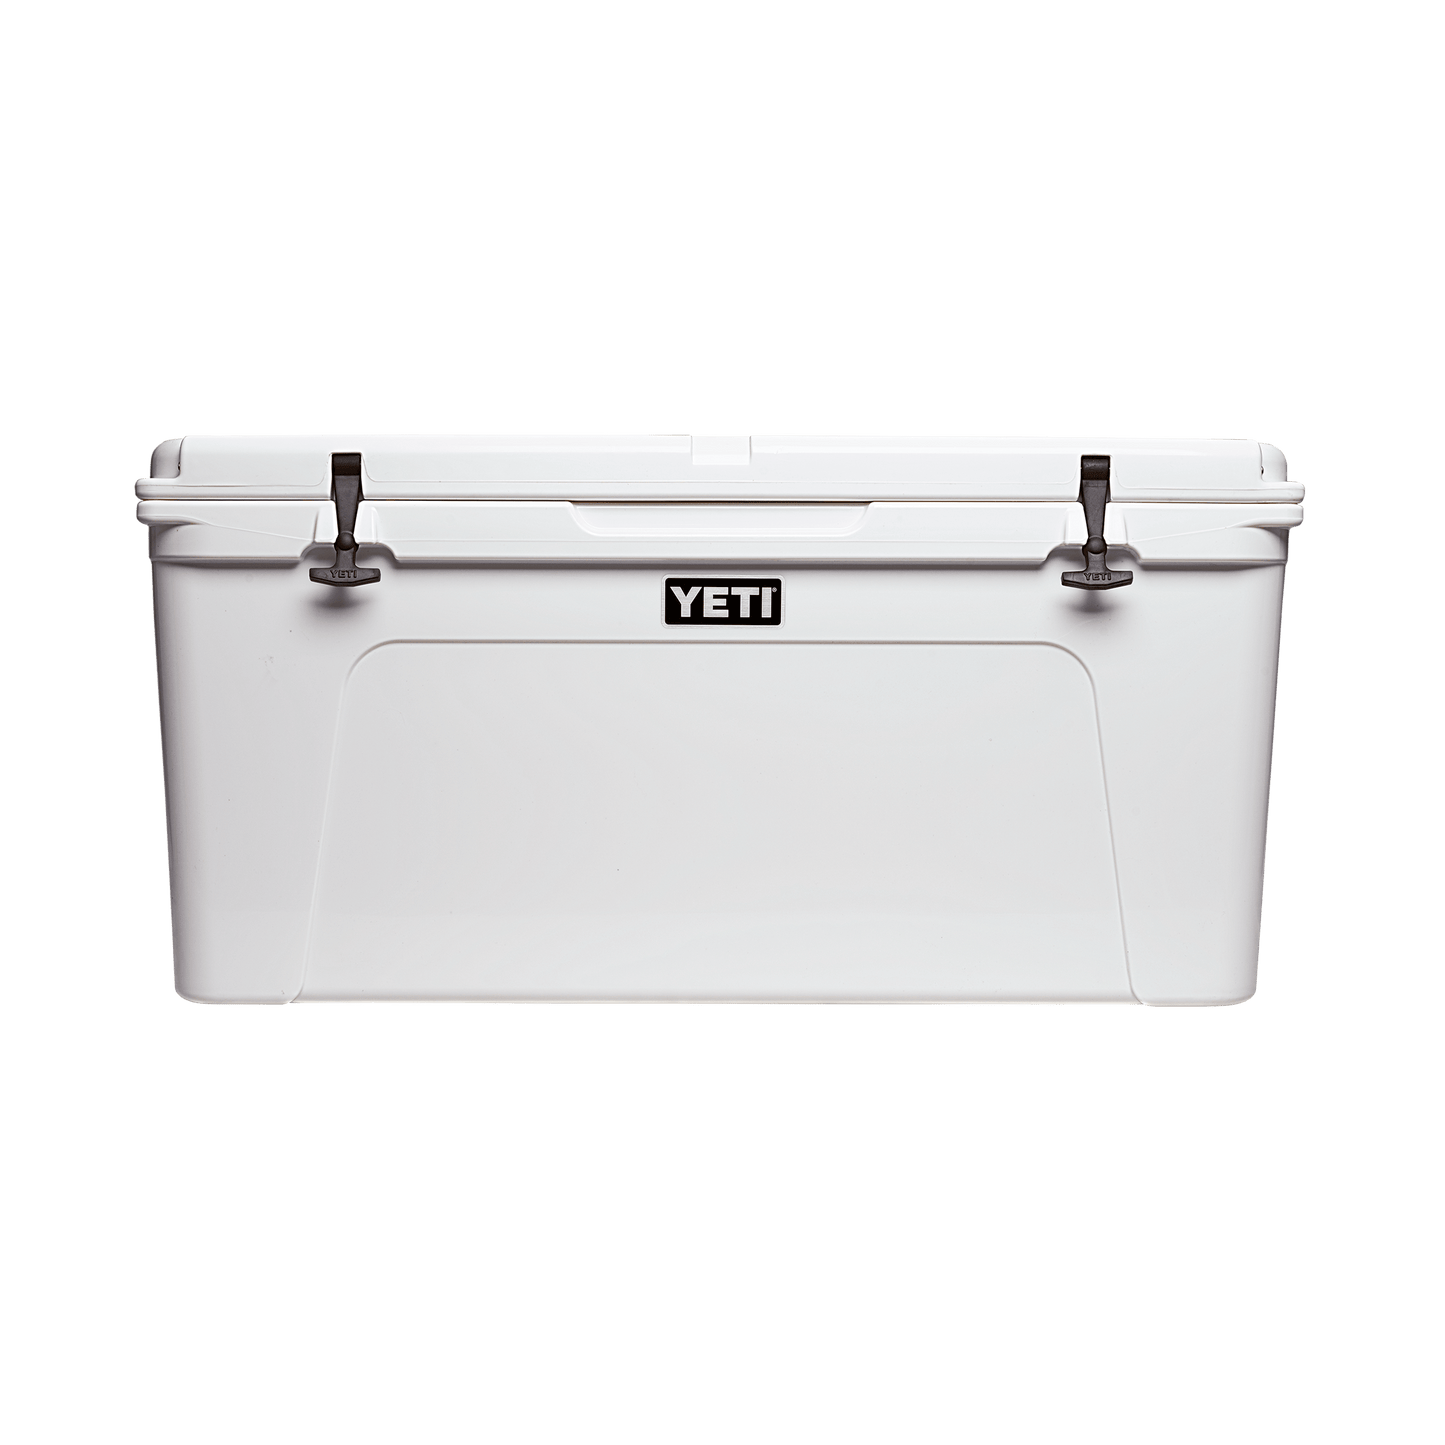 YETI Tundra® 125 Cool Box White